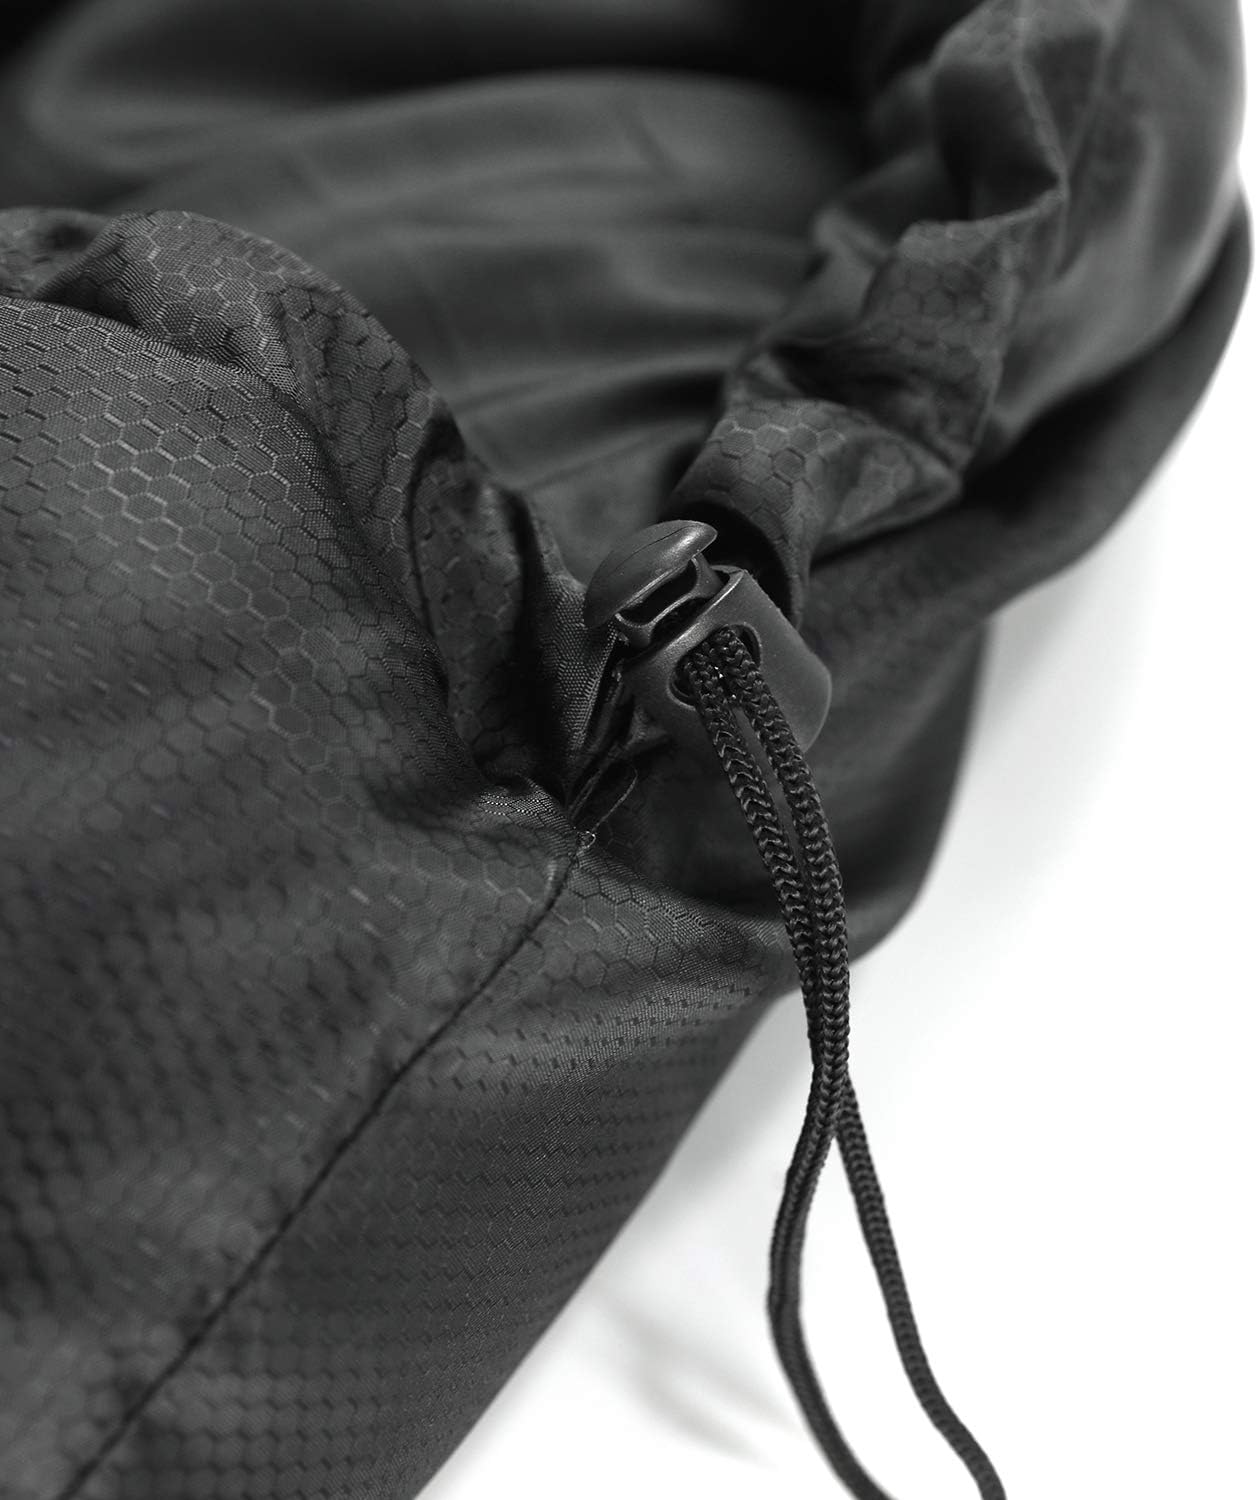 FE Hooded Active Camping Sleeping Bag - 4 Seasons, Extra Long & Lightweight